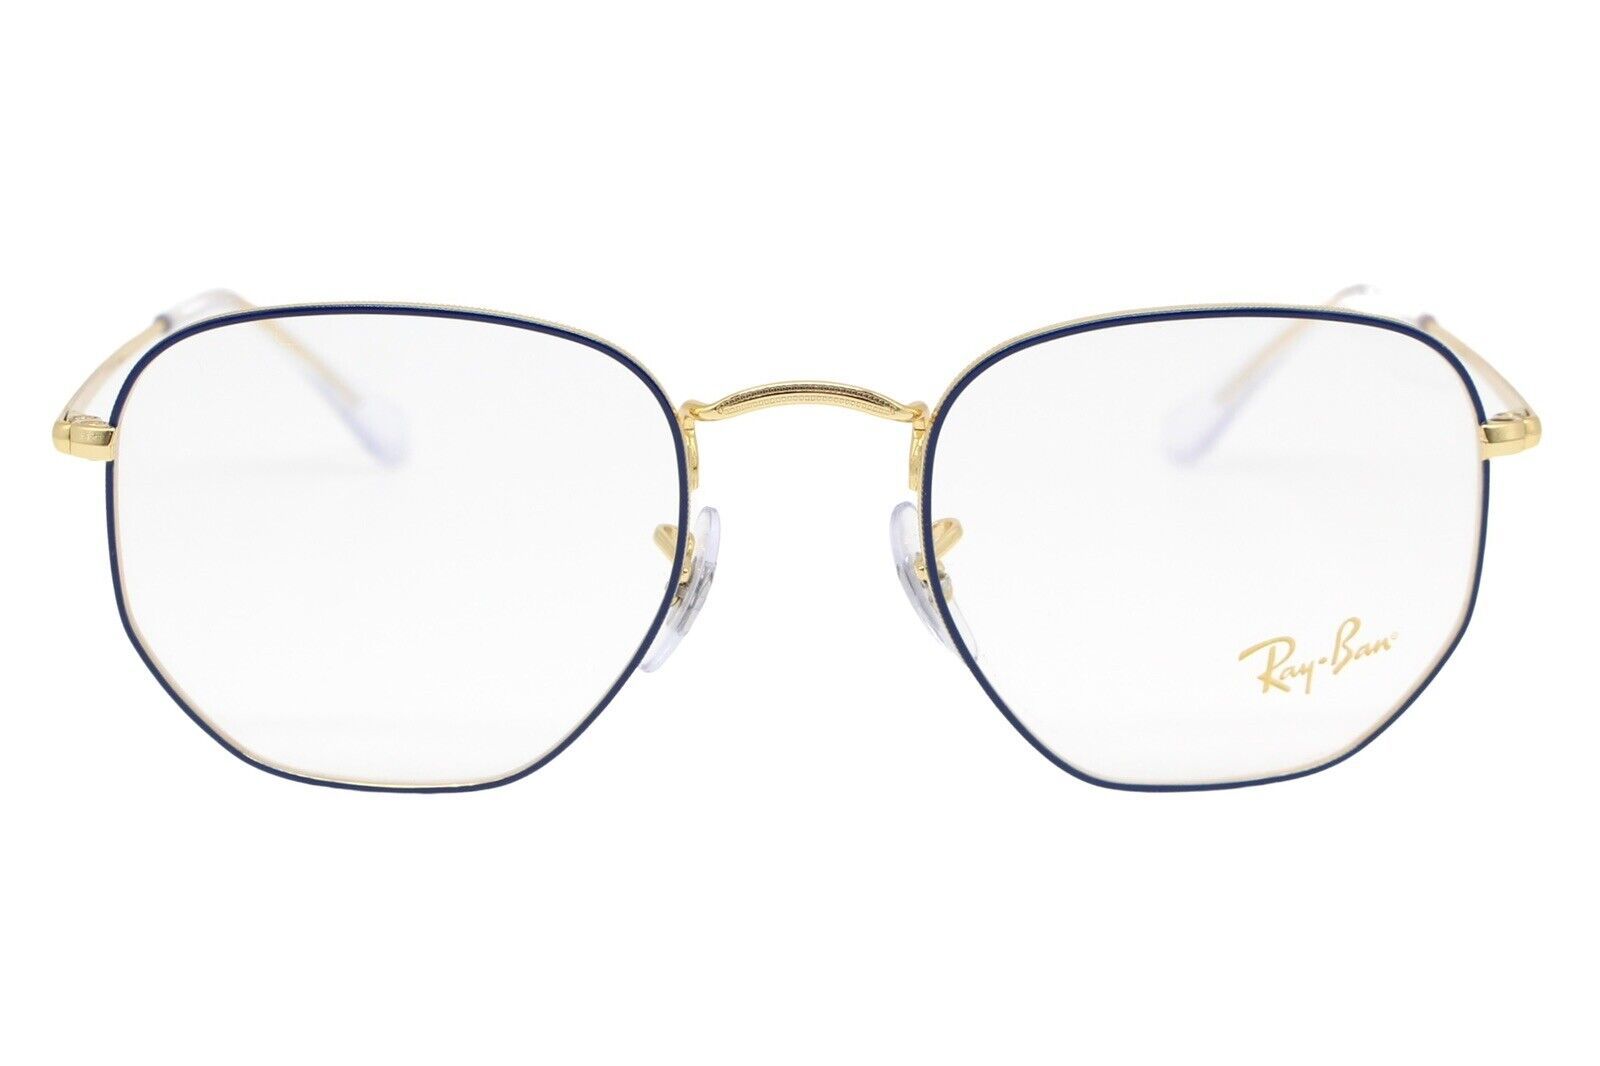 Ray Ban RB 6448 3105 Gold Blue Metal Unisex Eyeglasses 51-21-145 W/Case - $89.00